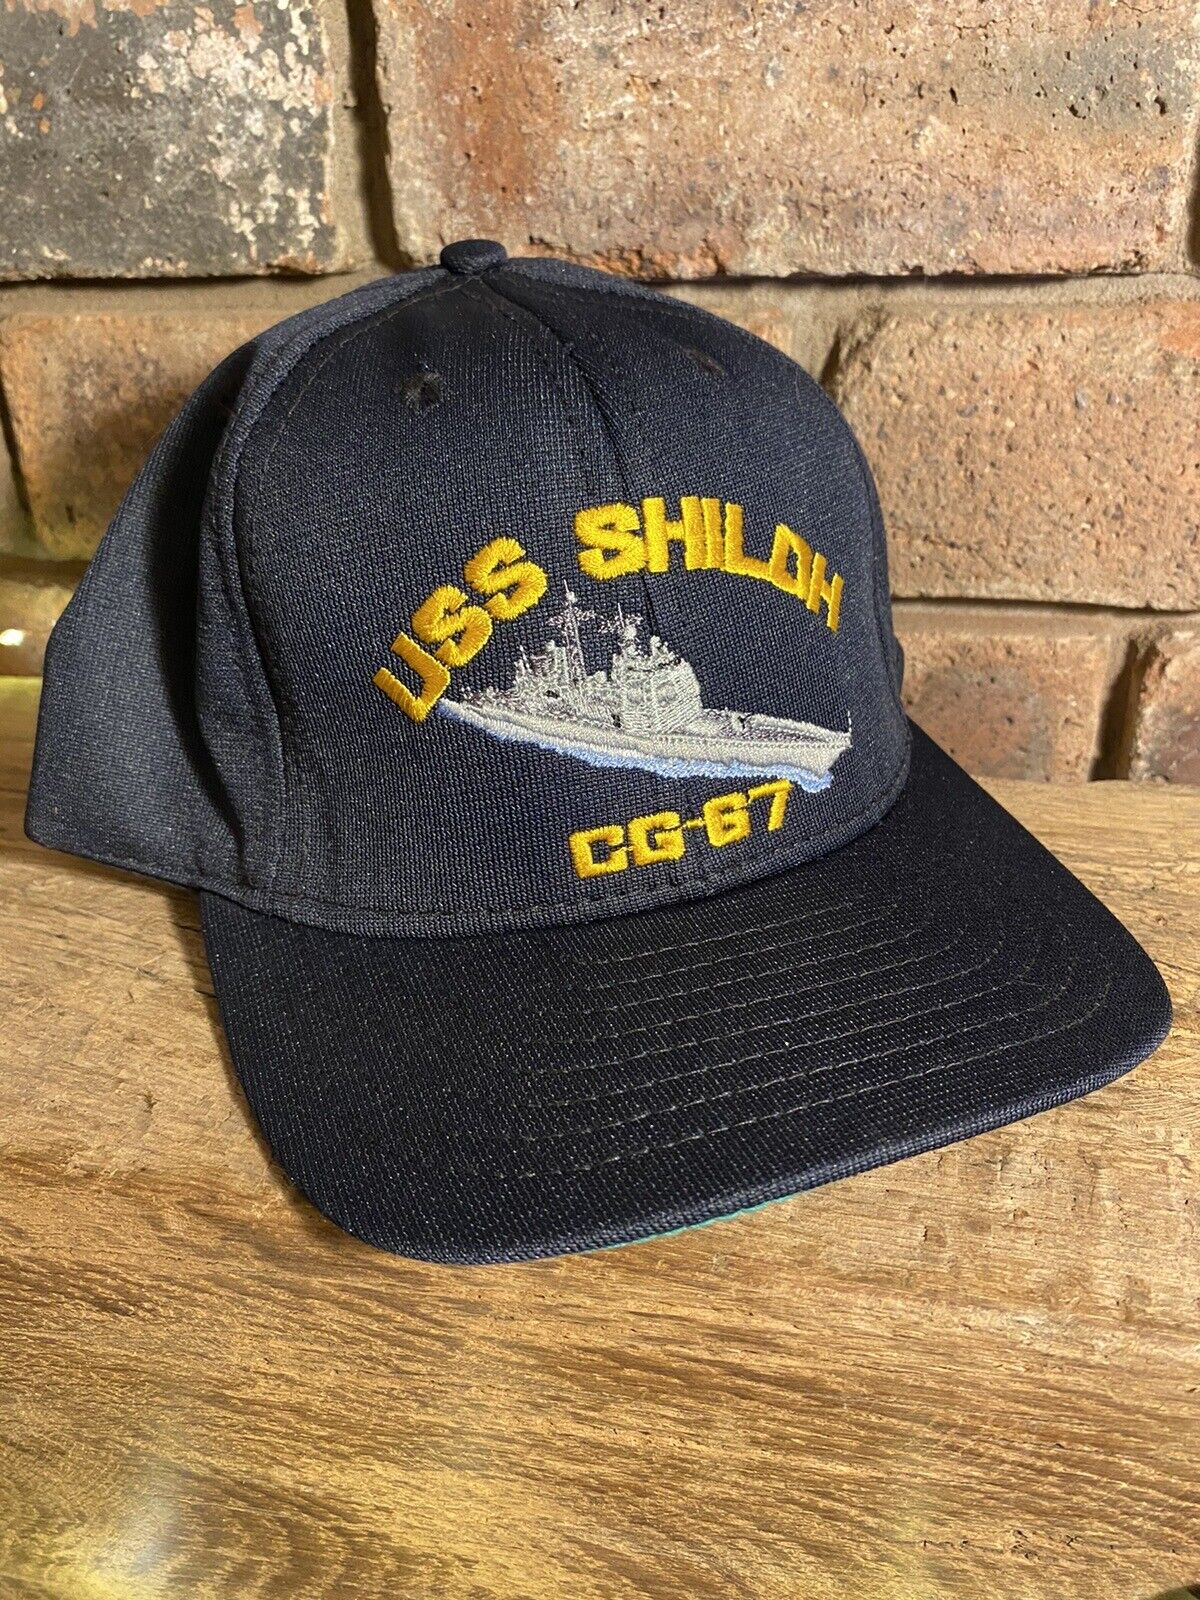 USS Baseball Cap “USS SHILOH” CG-67